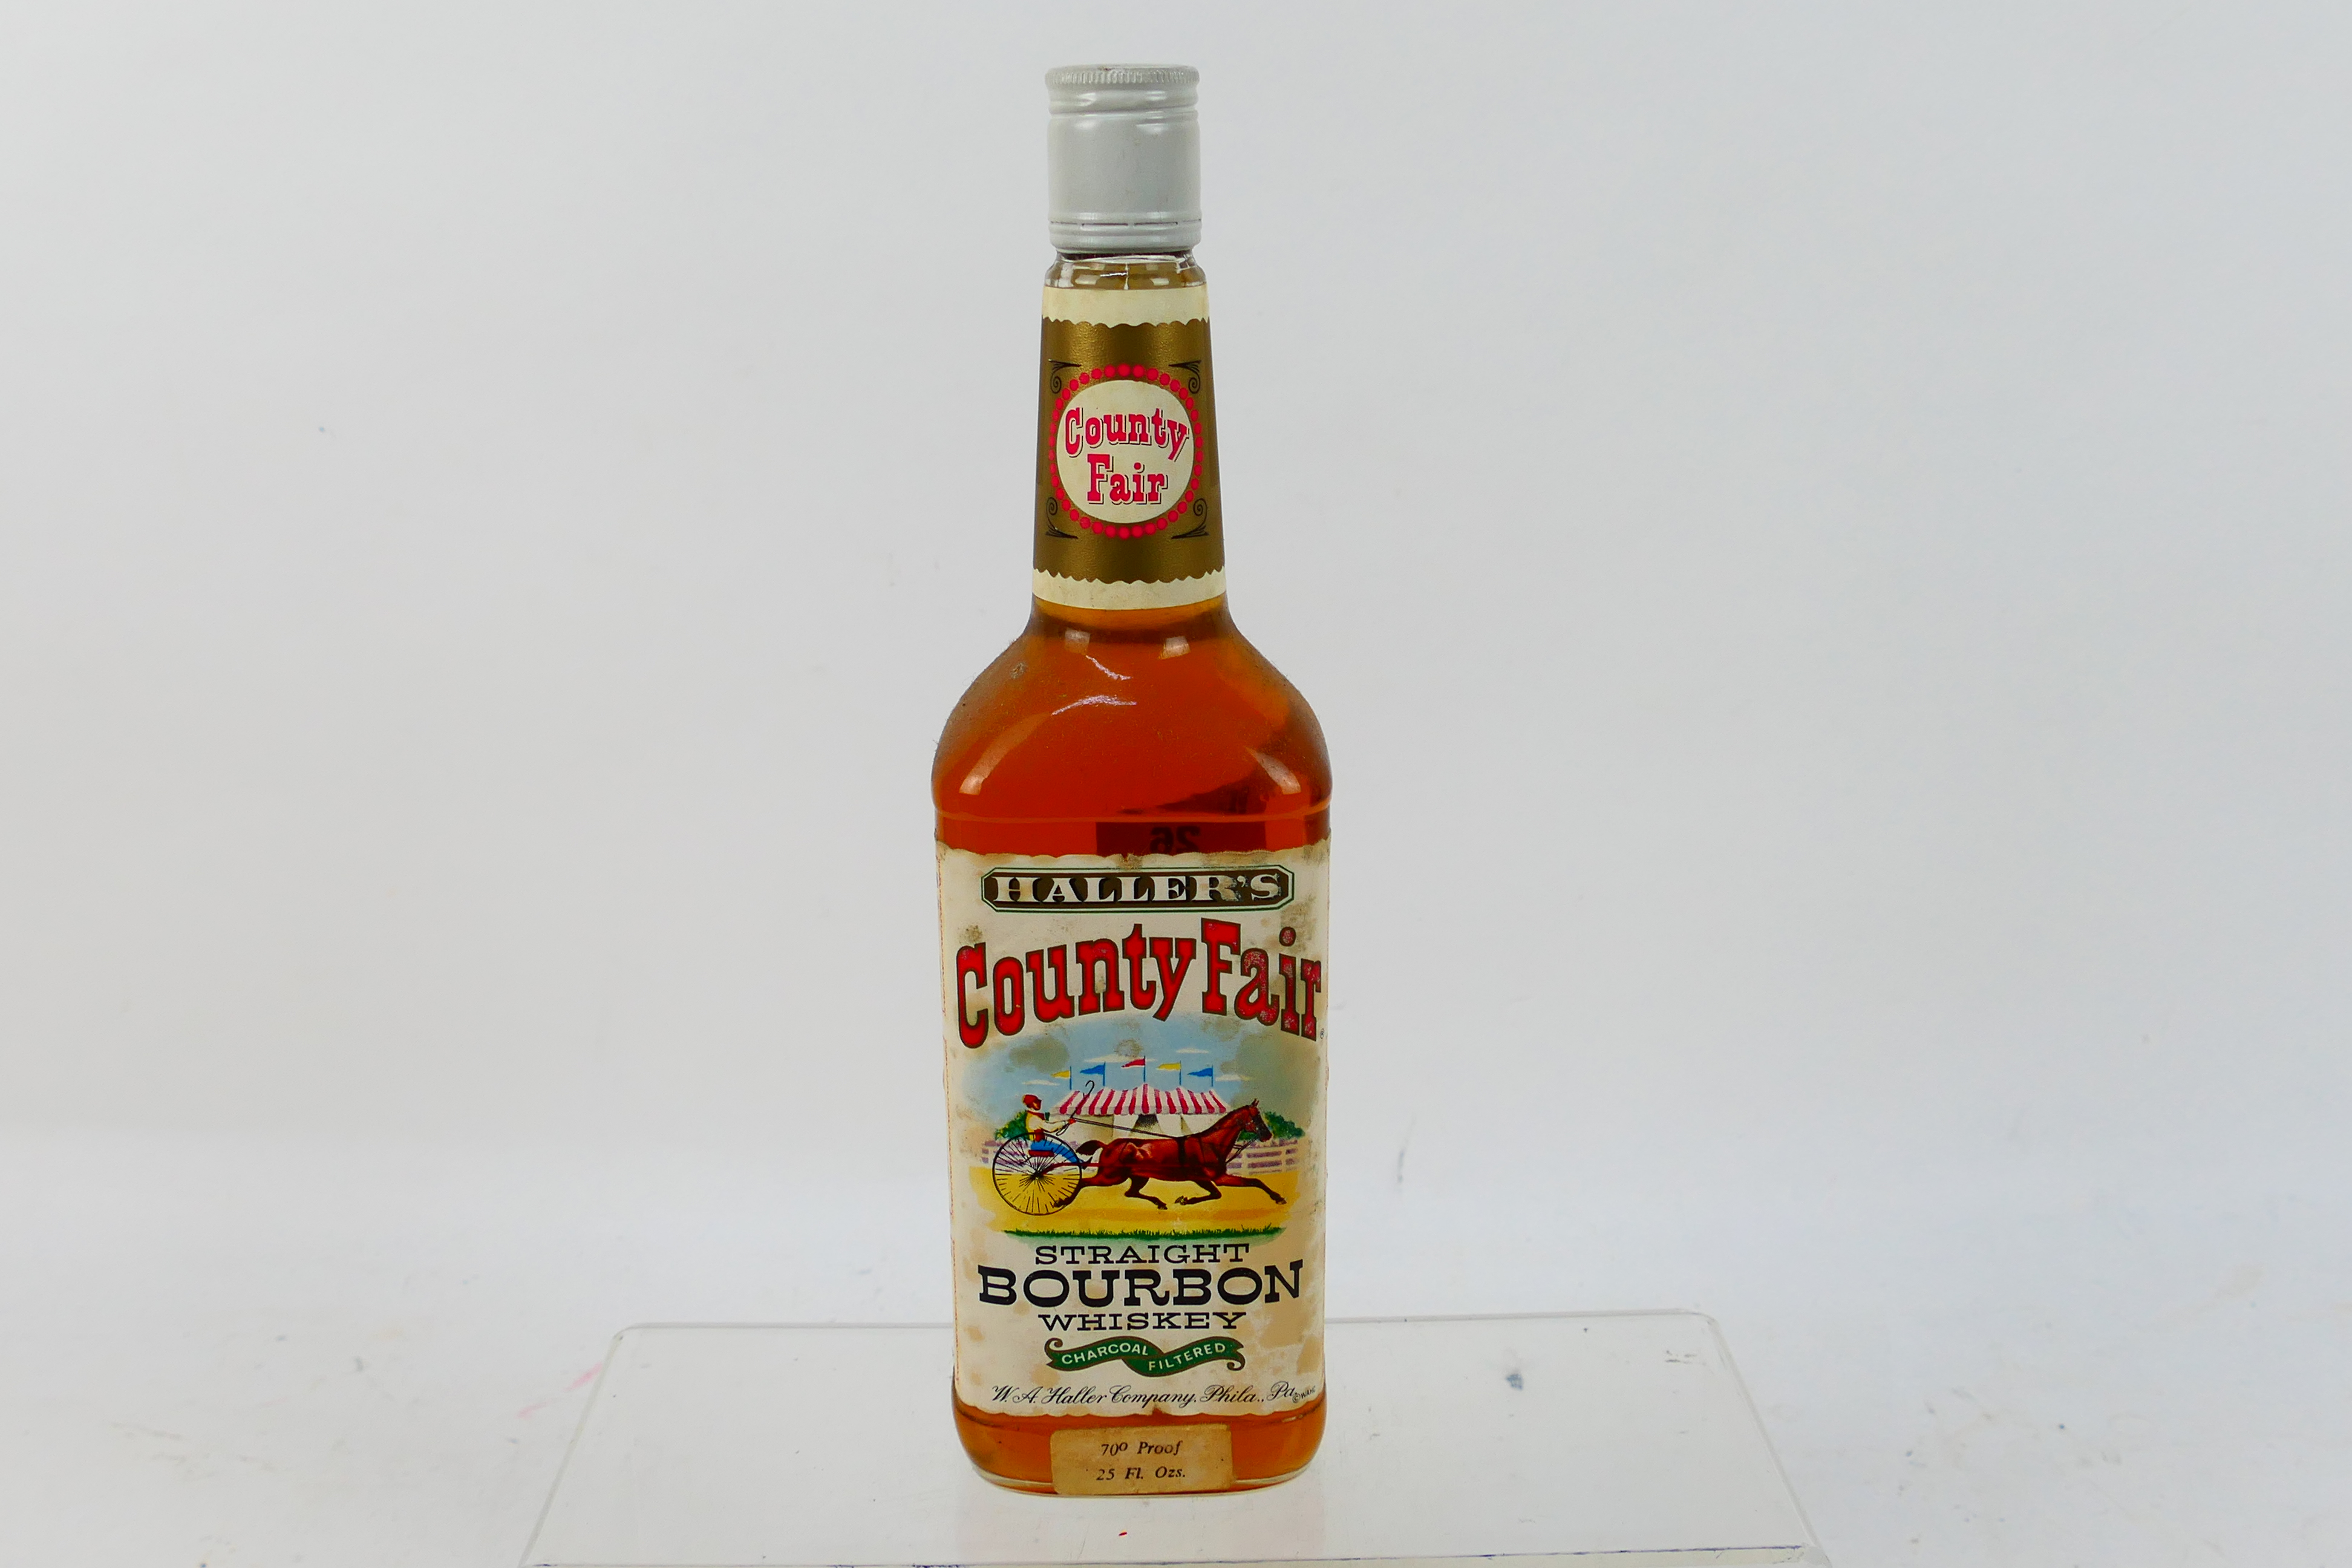 Bourbon - A 25 fl ozs bottle of Haller's County Fair Straight Bourbon Whiskey, 70° Proof,